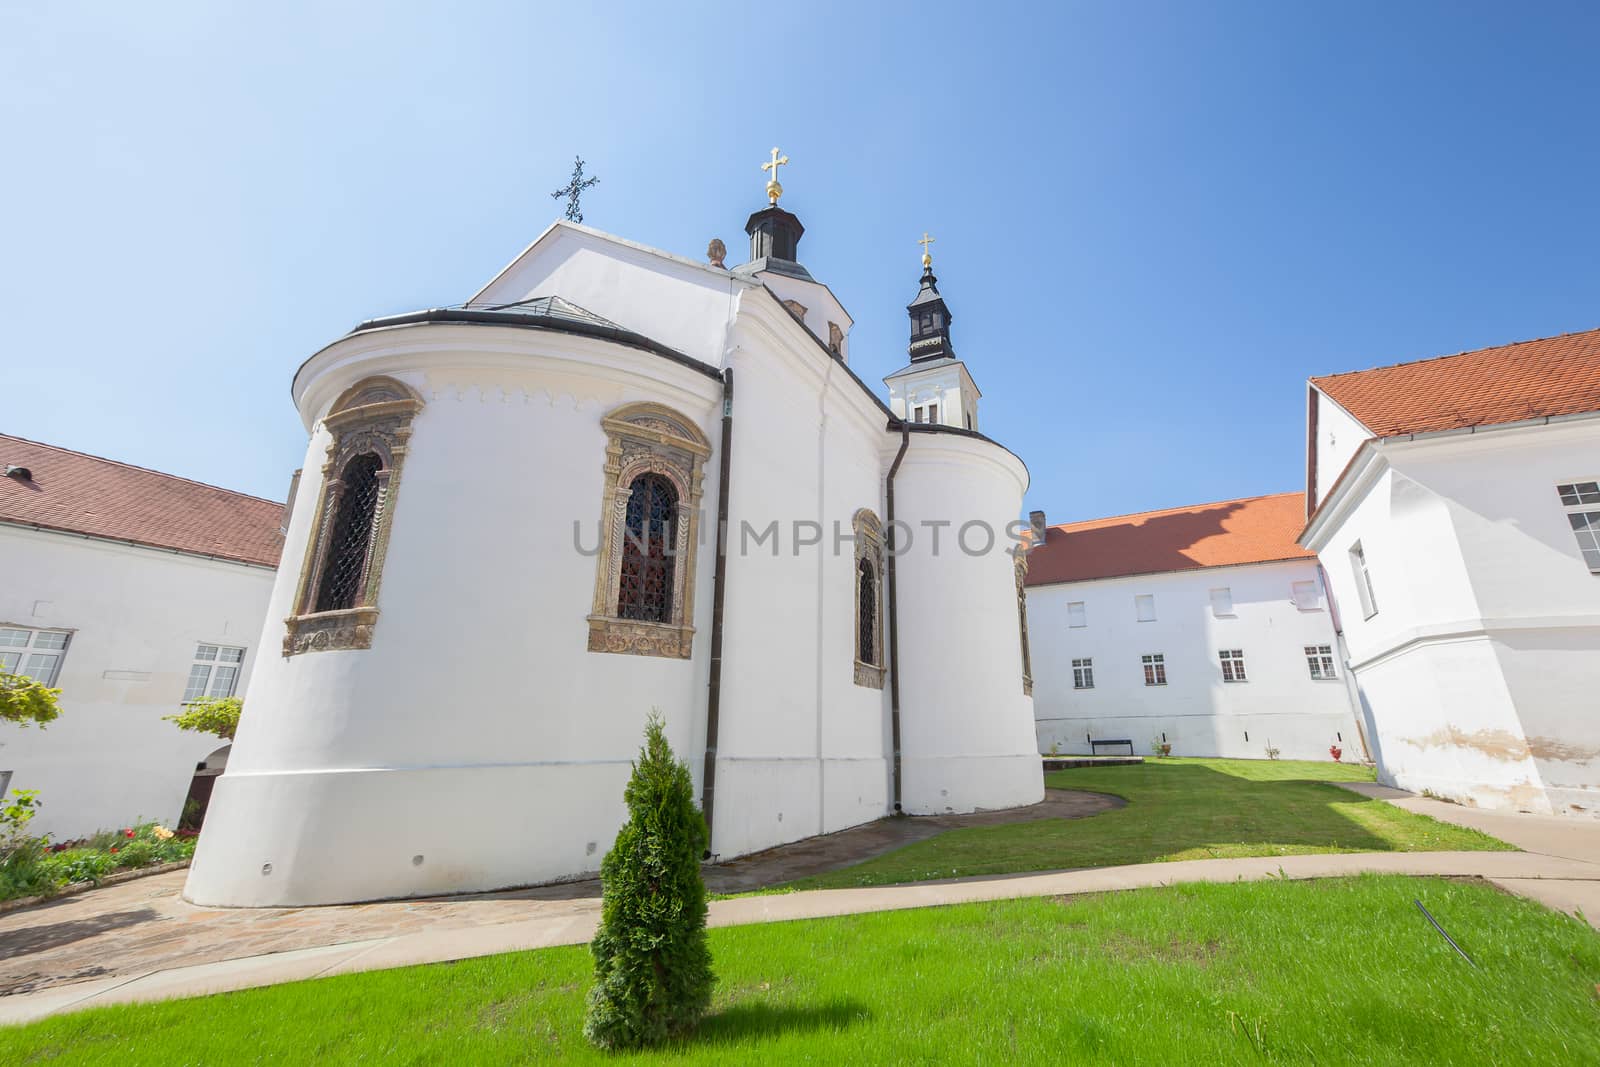 Krusedol Monastery, Fruska Gora National Park, Serbia. Monastery Krusedol episcopal church in Fruska Gora, Serbia . It was built between 1509 and 1514